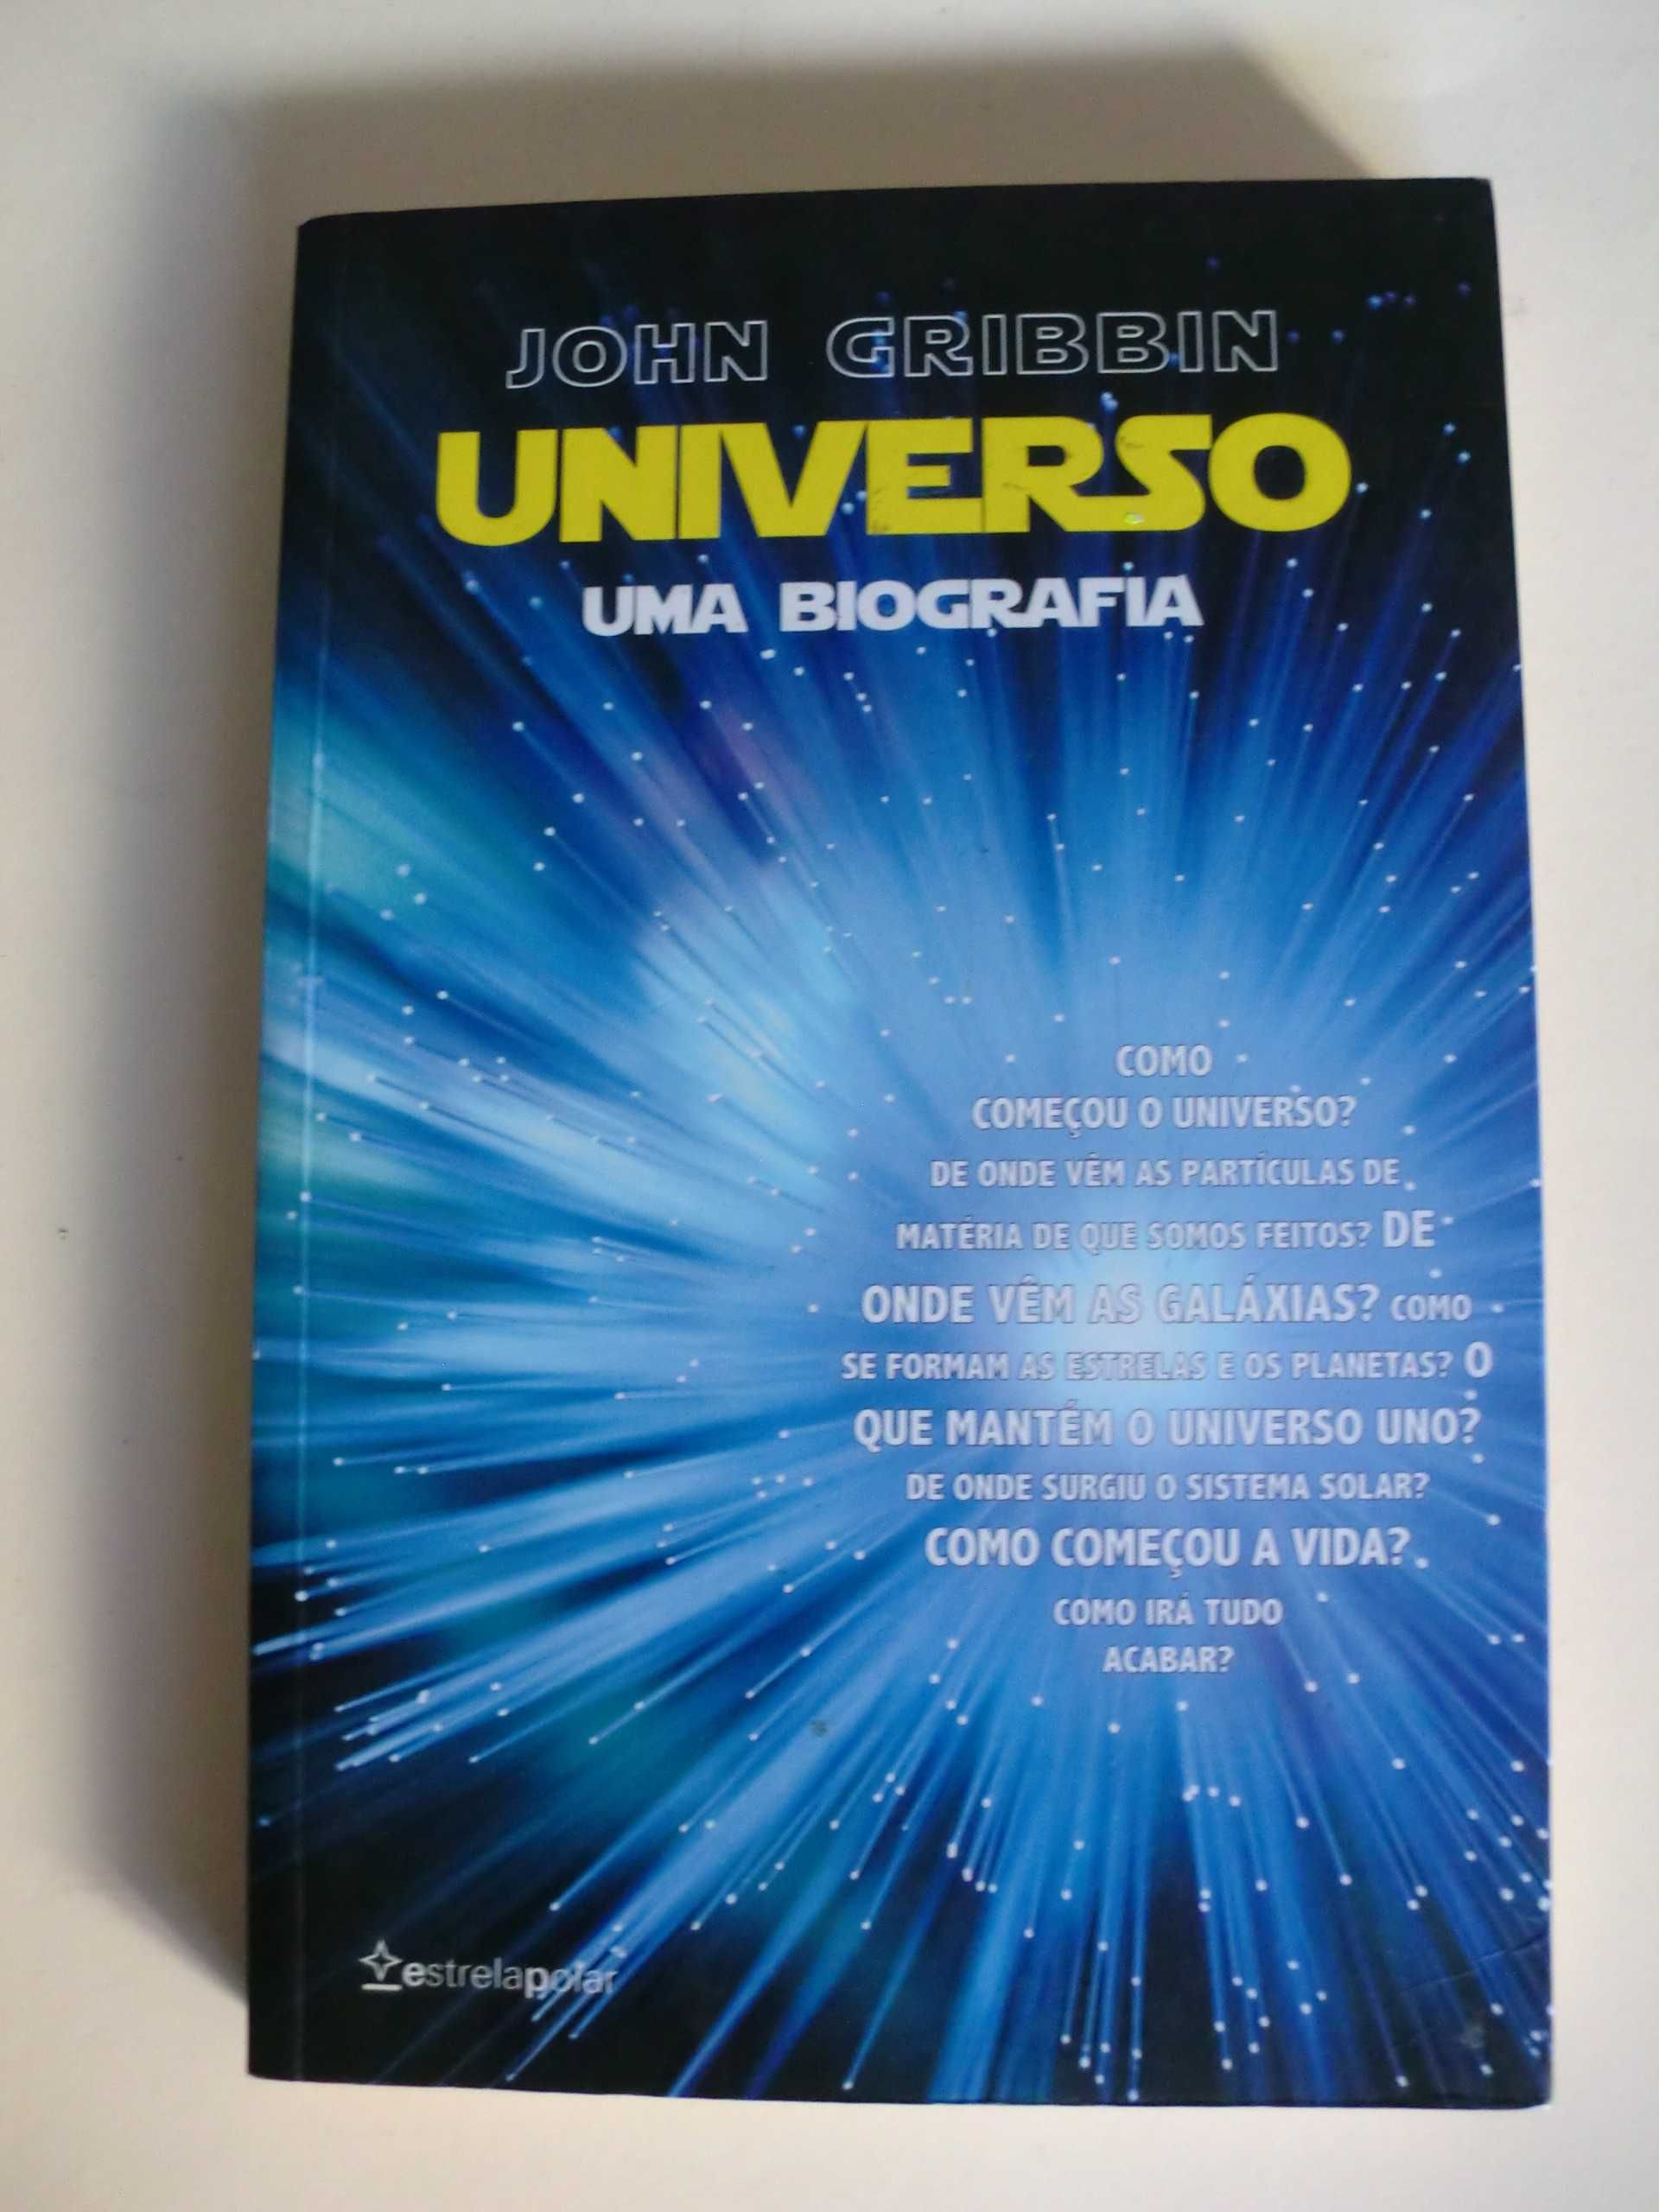 Universo, uma biografia
de John Gribbin